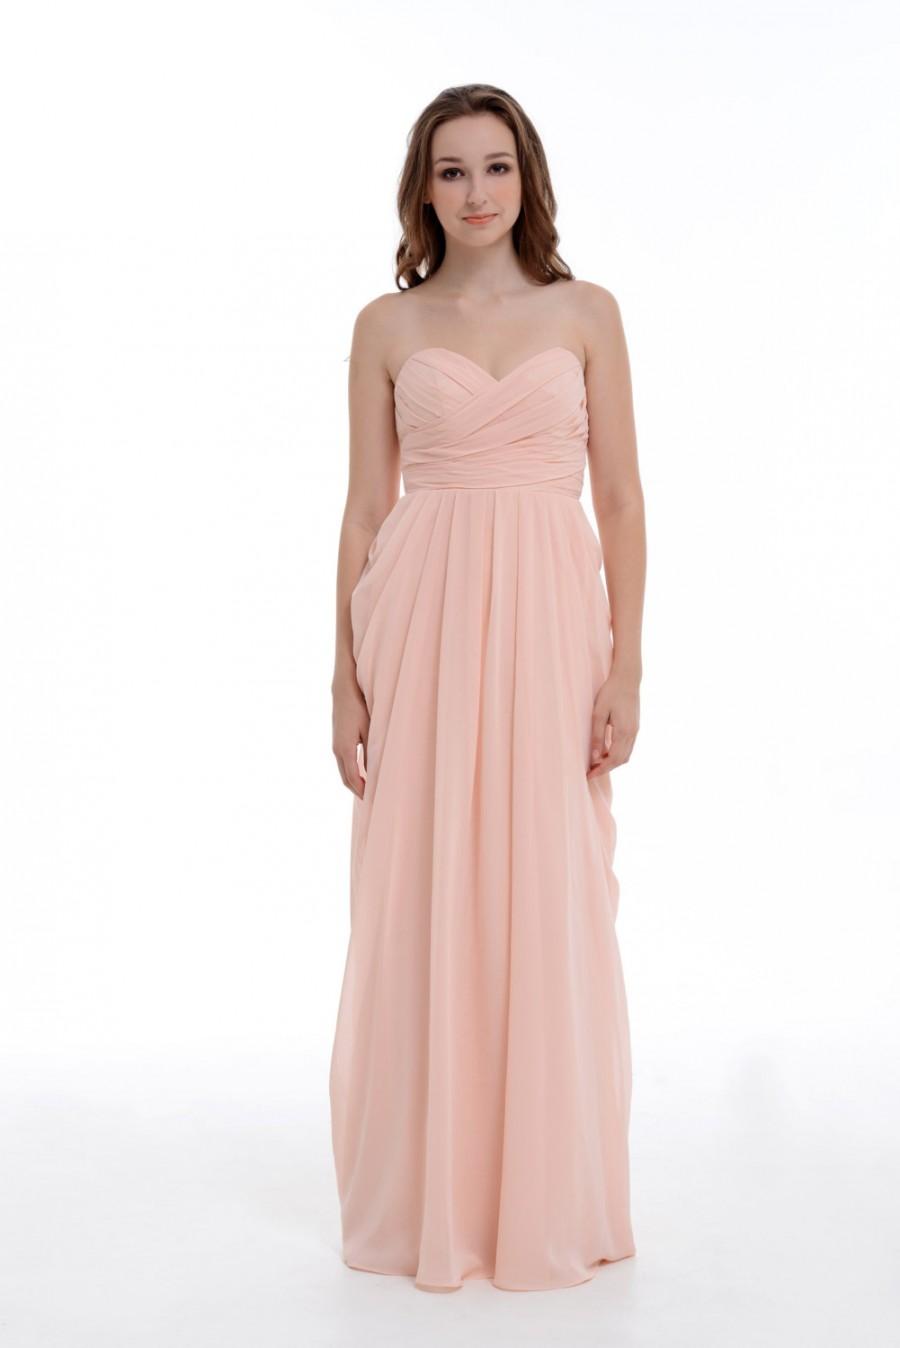 Mariage - Prom Dress 2015, Sweetheart Pearl Pink A-Line/Princess Floor-Length Chiffon Bridesmaid Dress With Ruffle